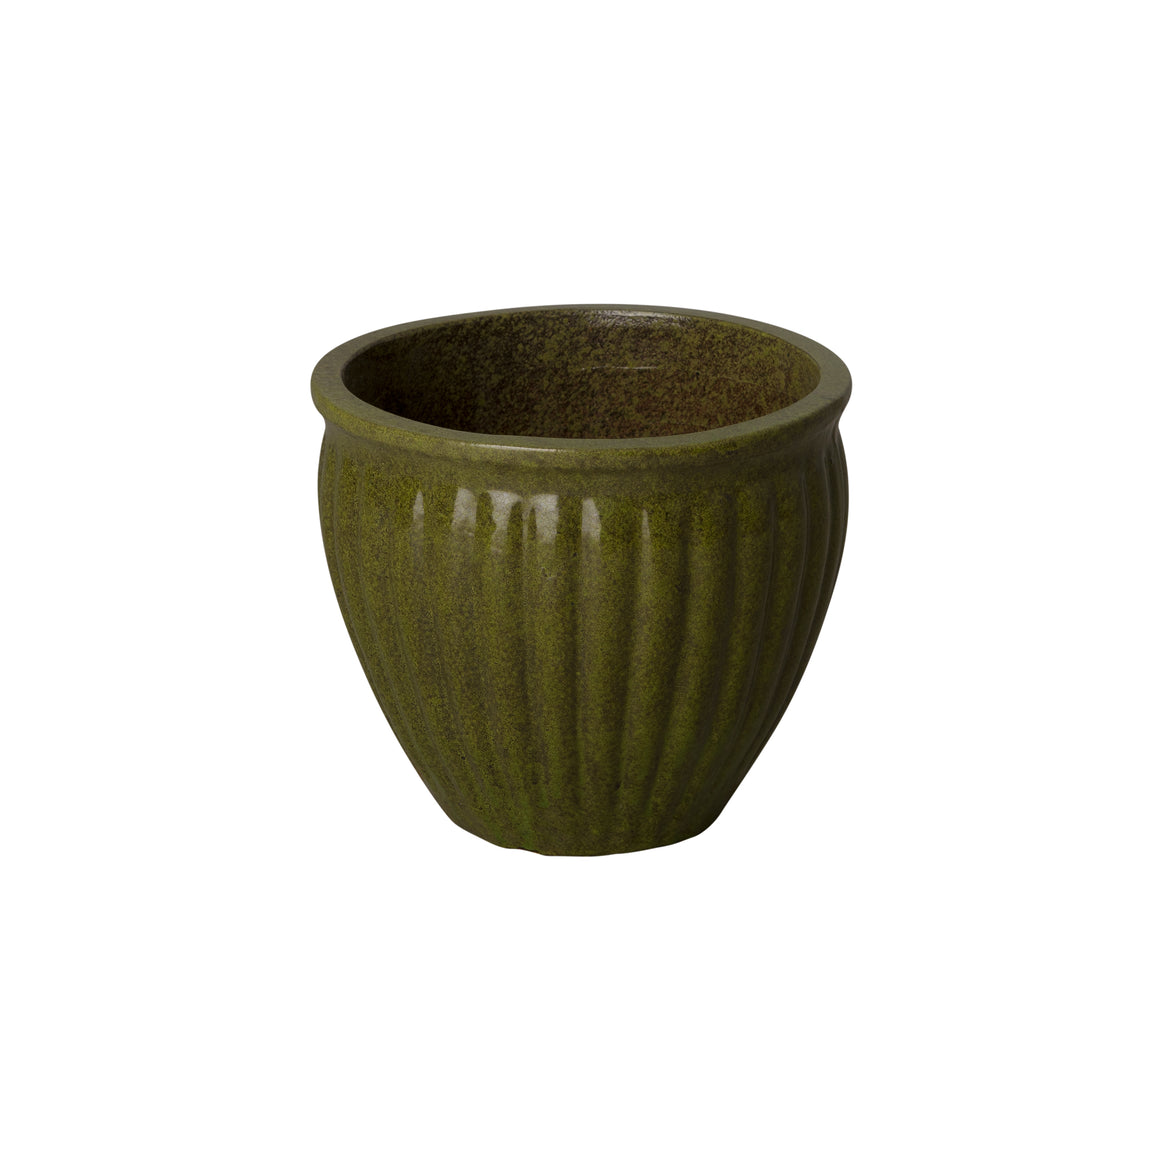 Round Ridge Ceramic Planter with a Tropical Green Glaze